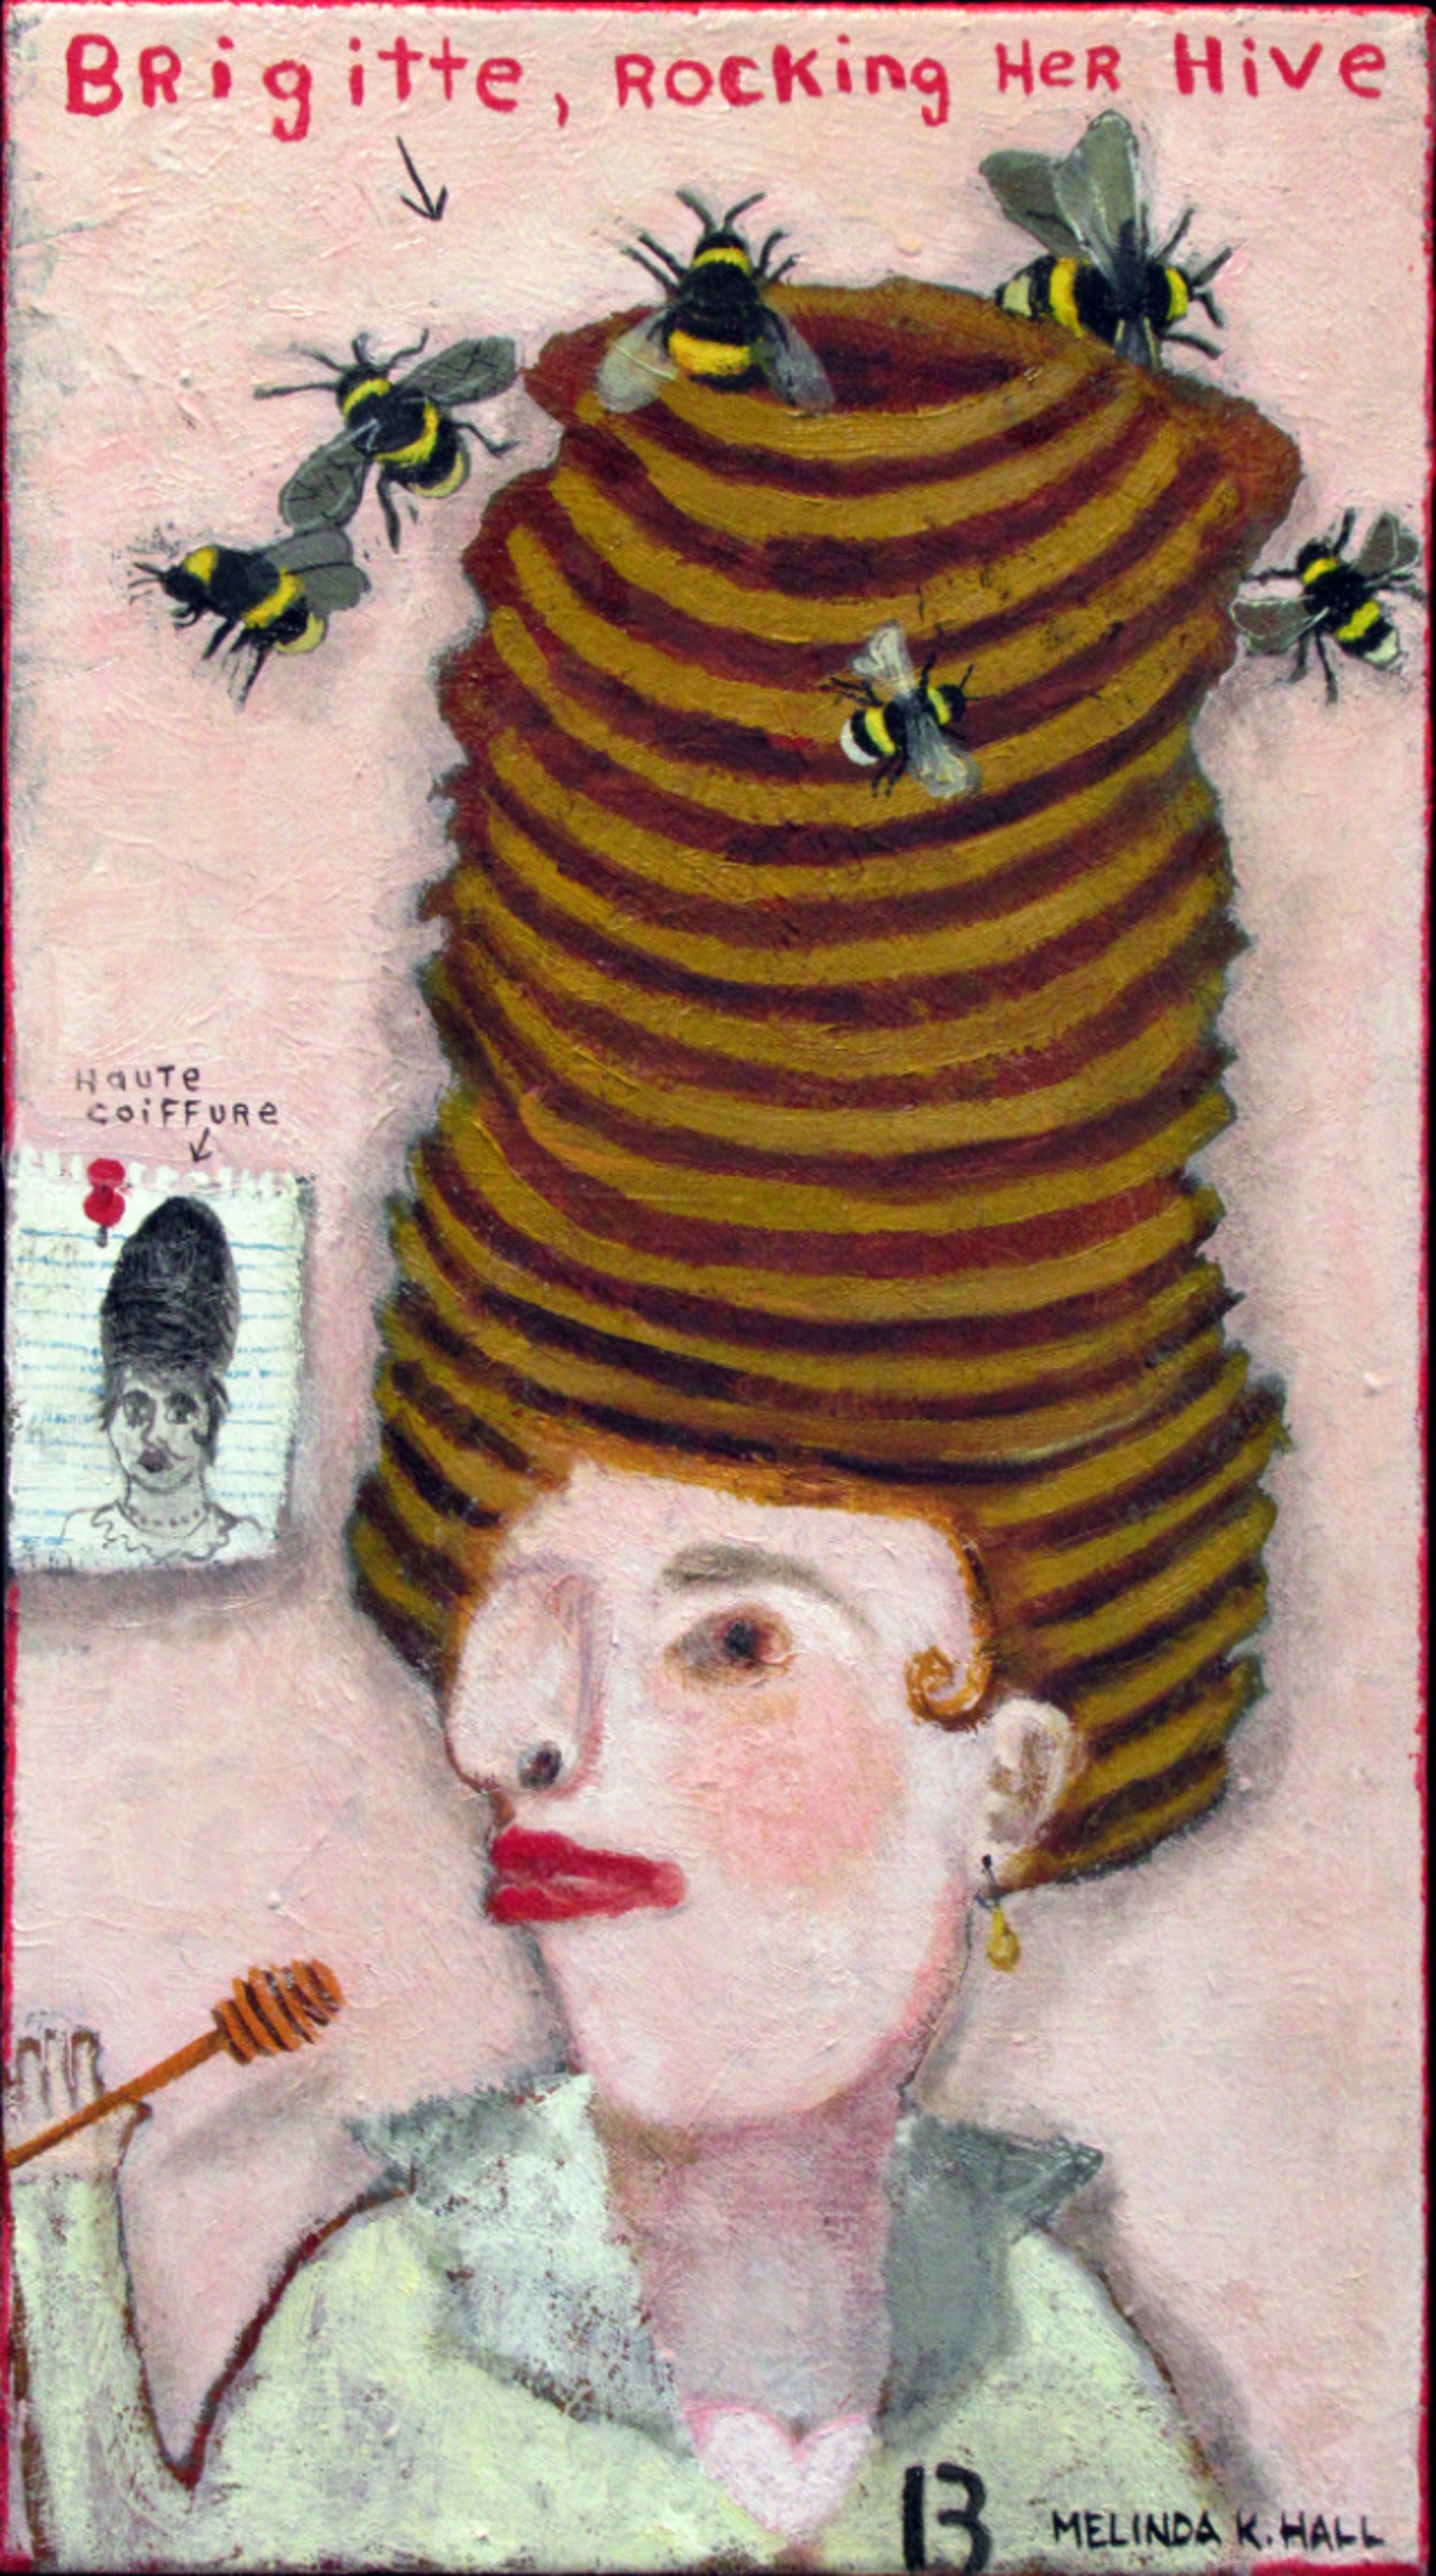 Brigitte, Rocking Her Hive by Melinda K. Hall